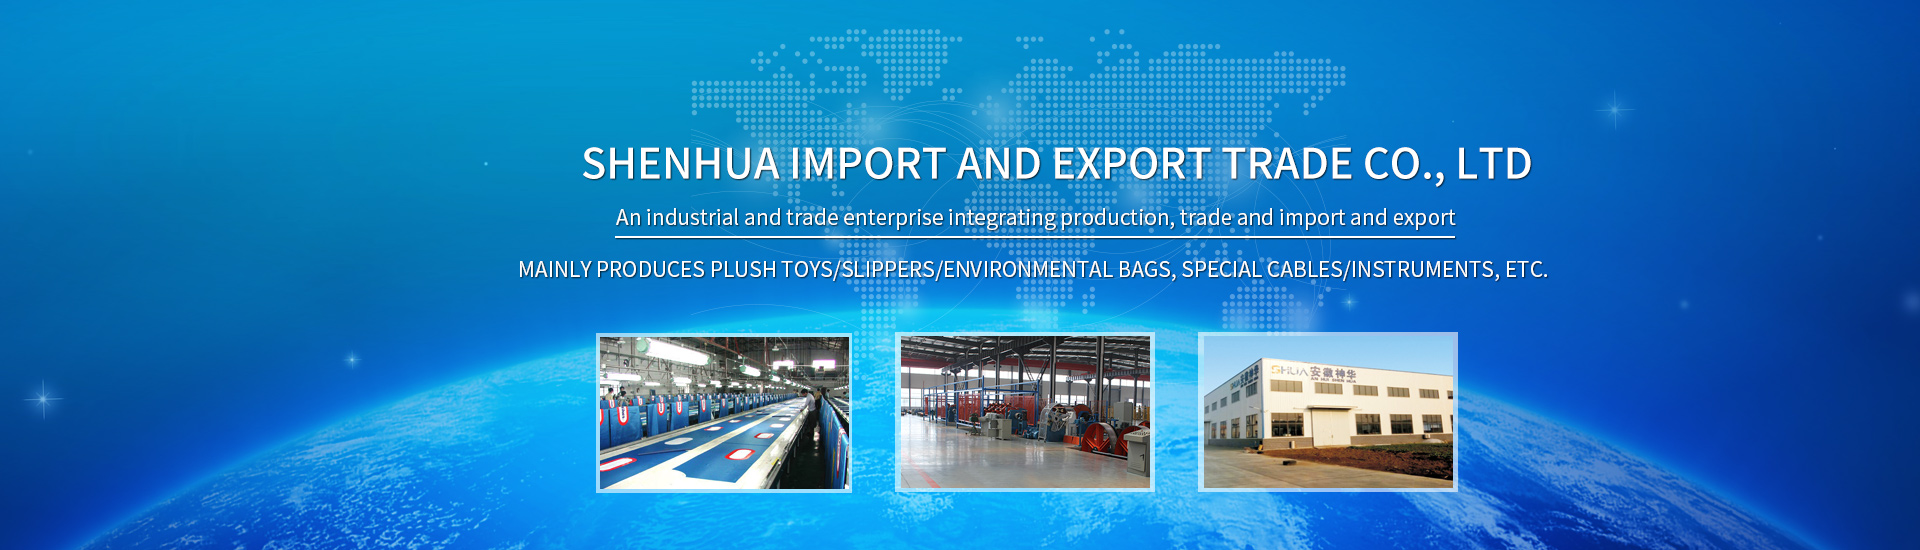 Shenhua Import and Export Trade Co., Ltd